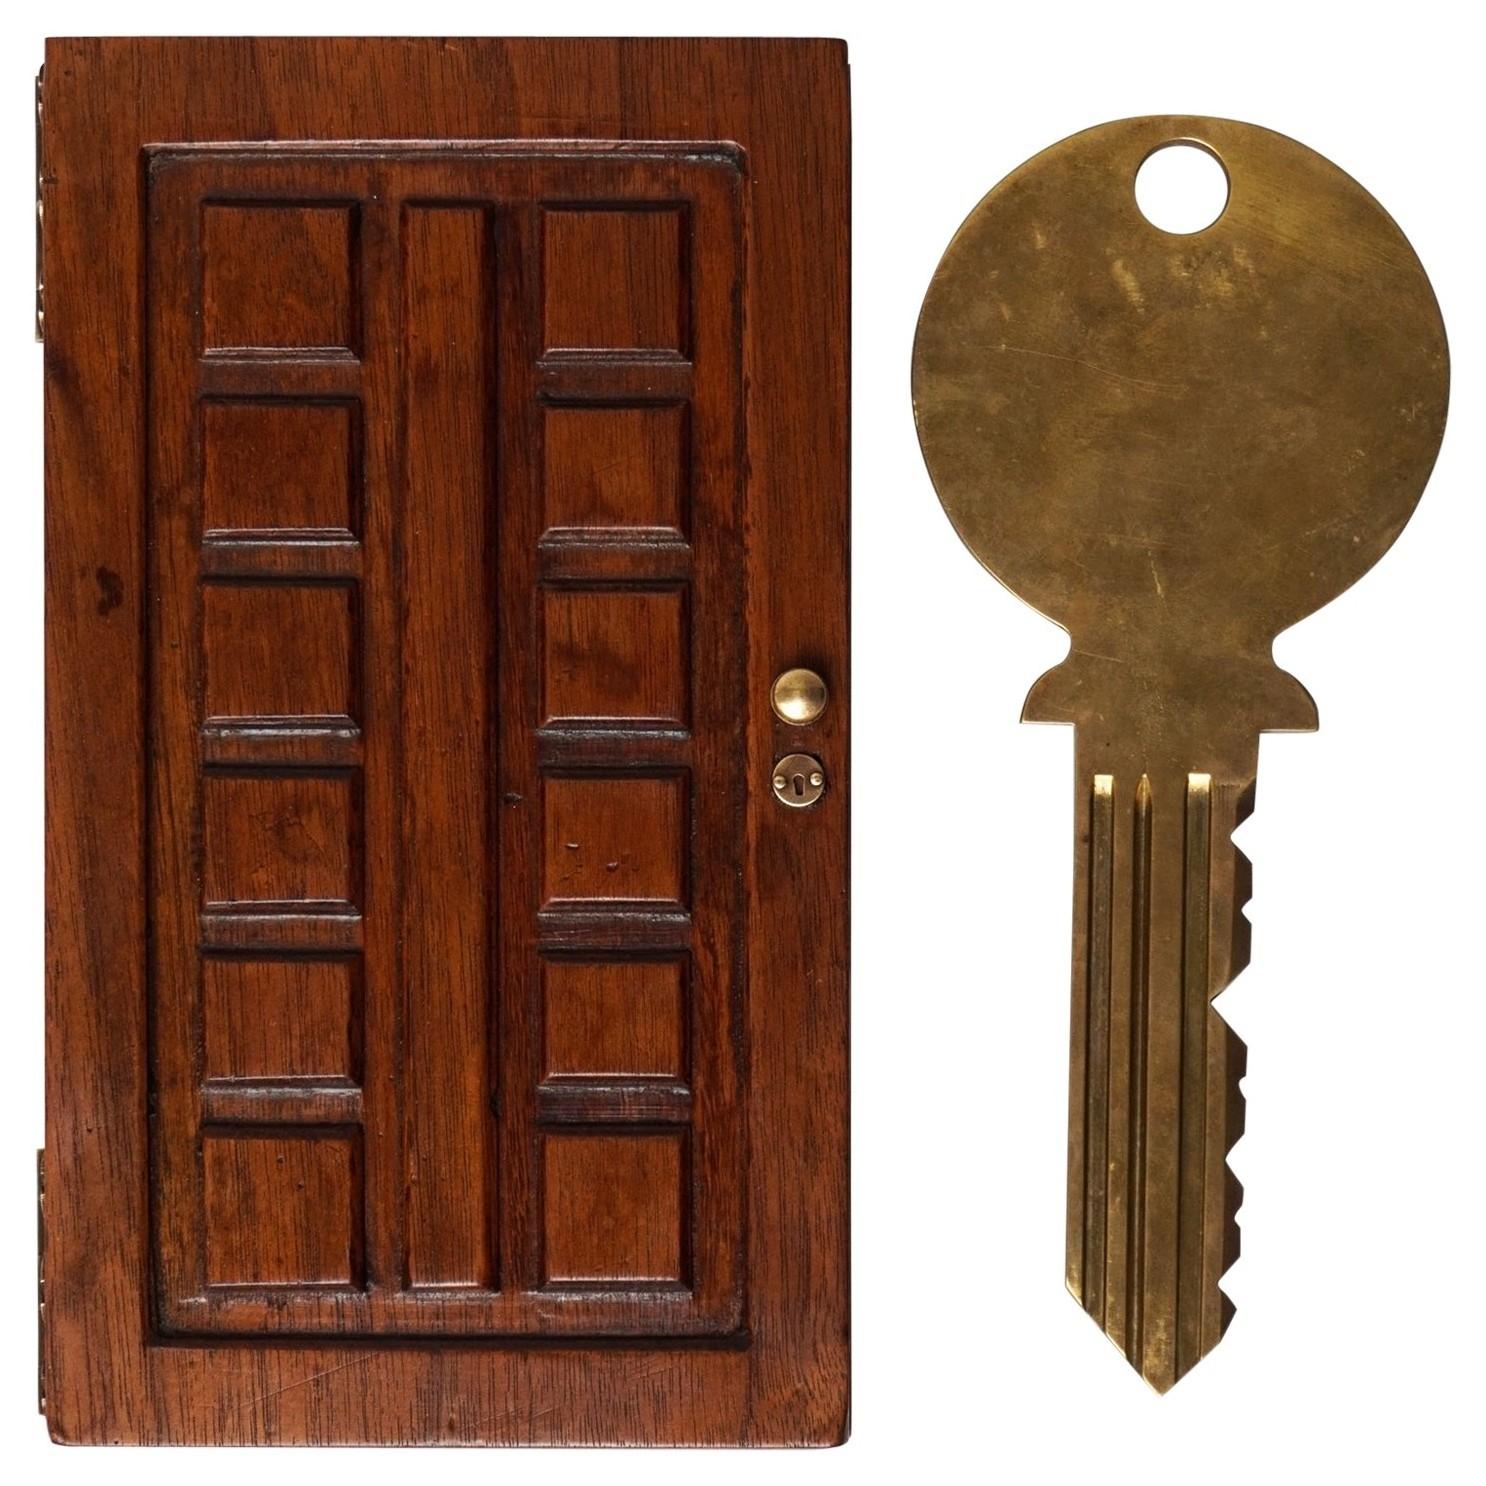 Midcentury Large Brass Key in Walnut Wood Flat Box Shaped as a Door